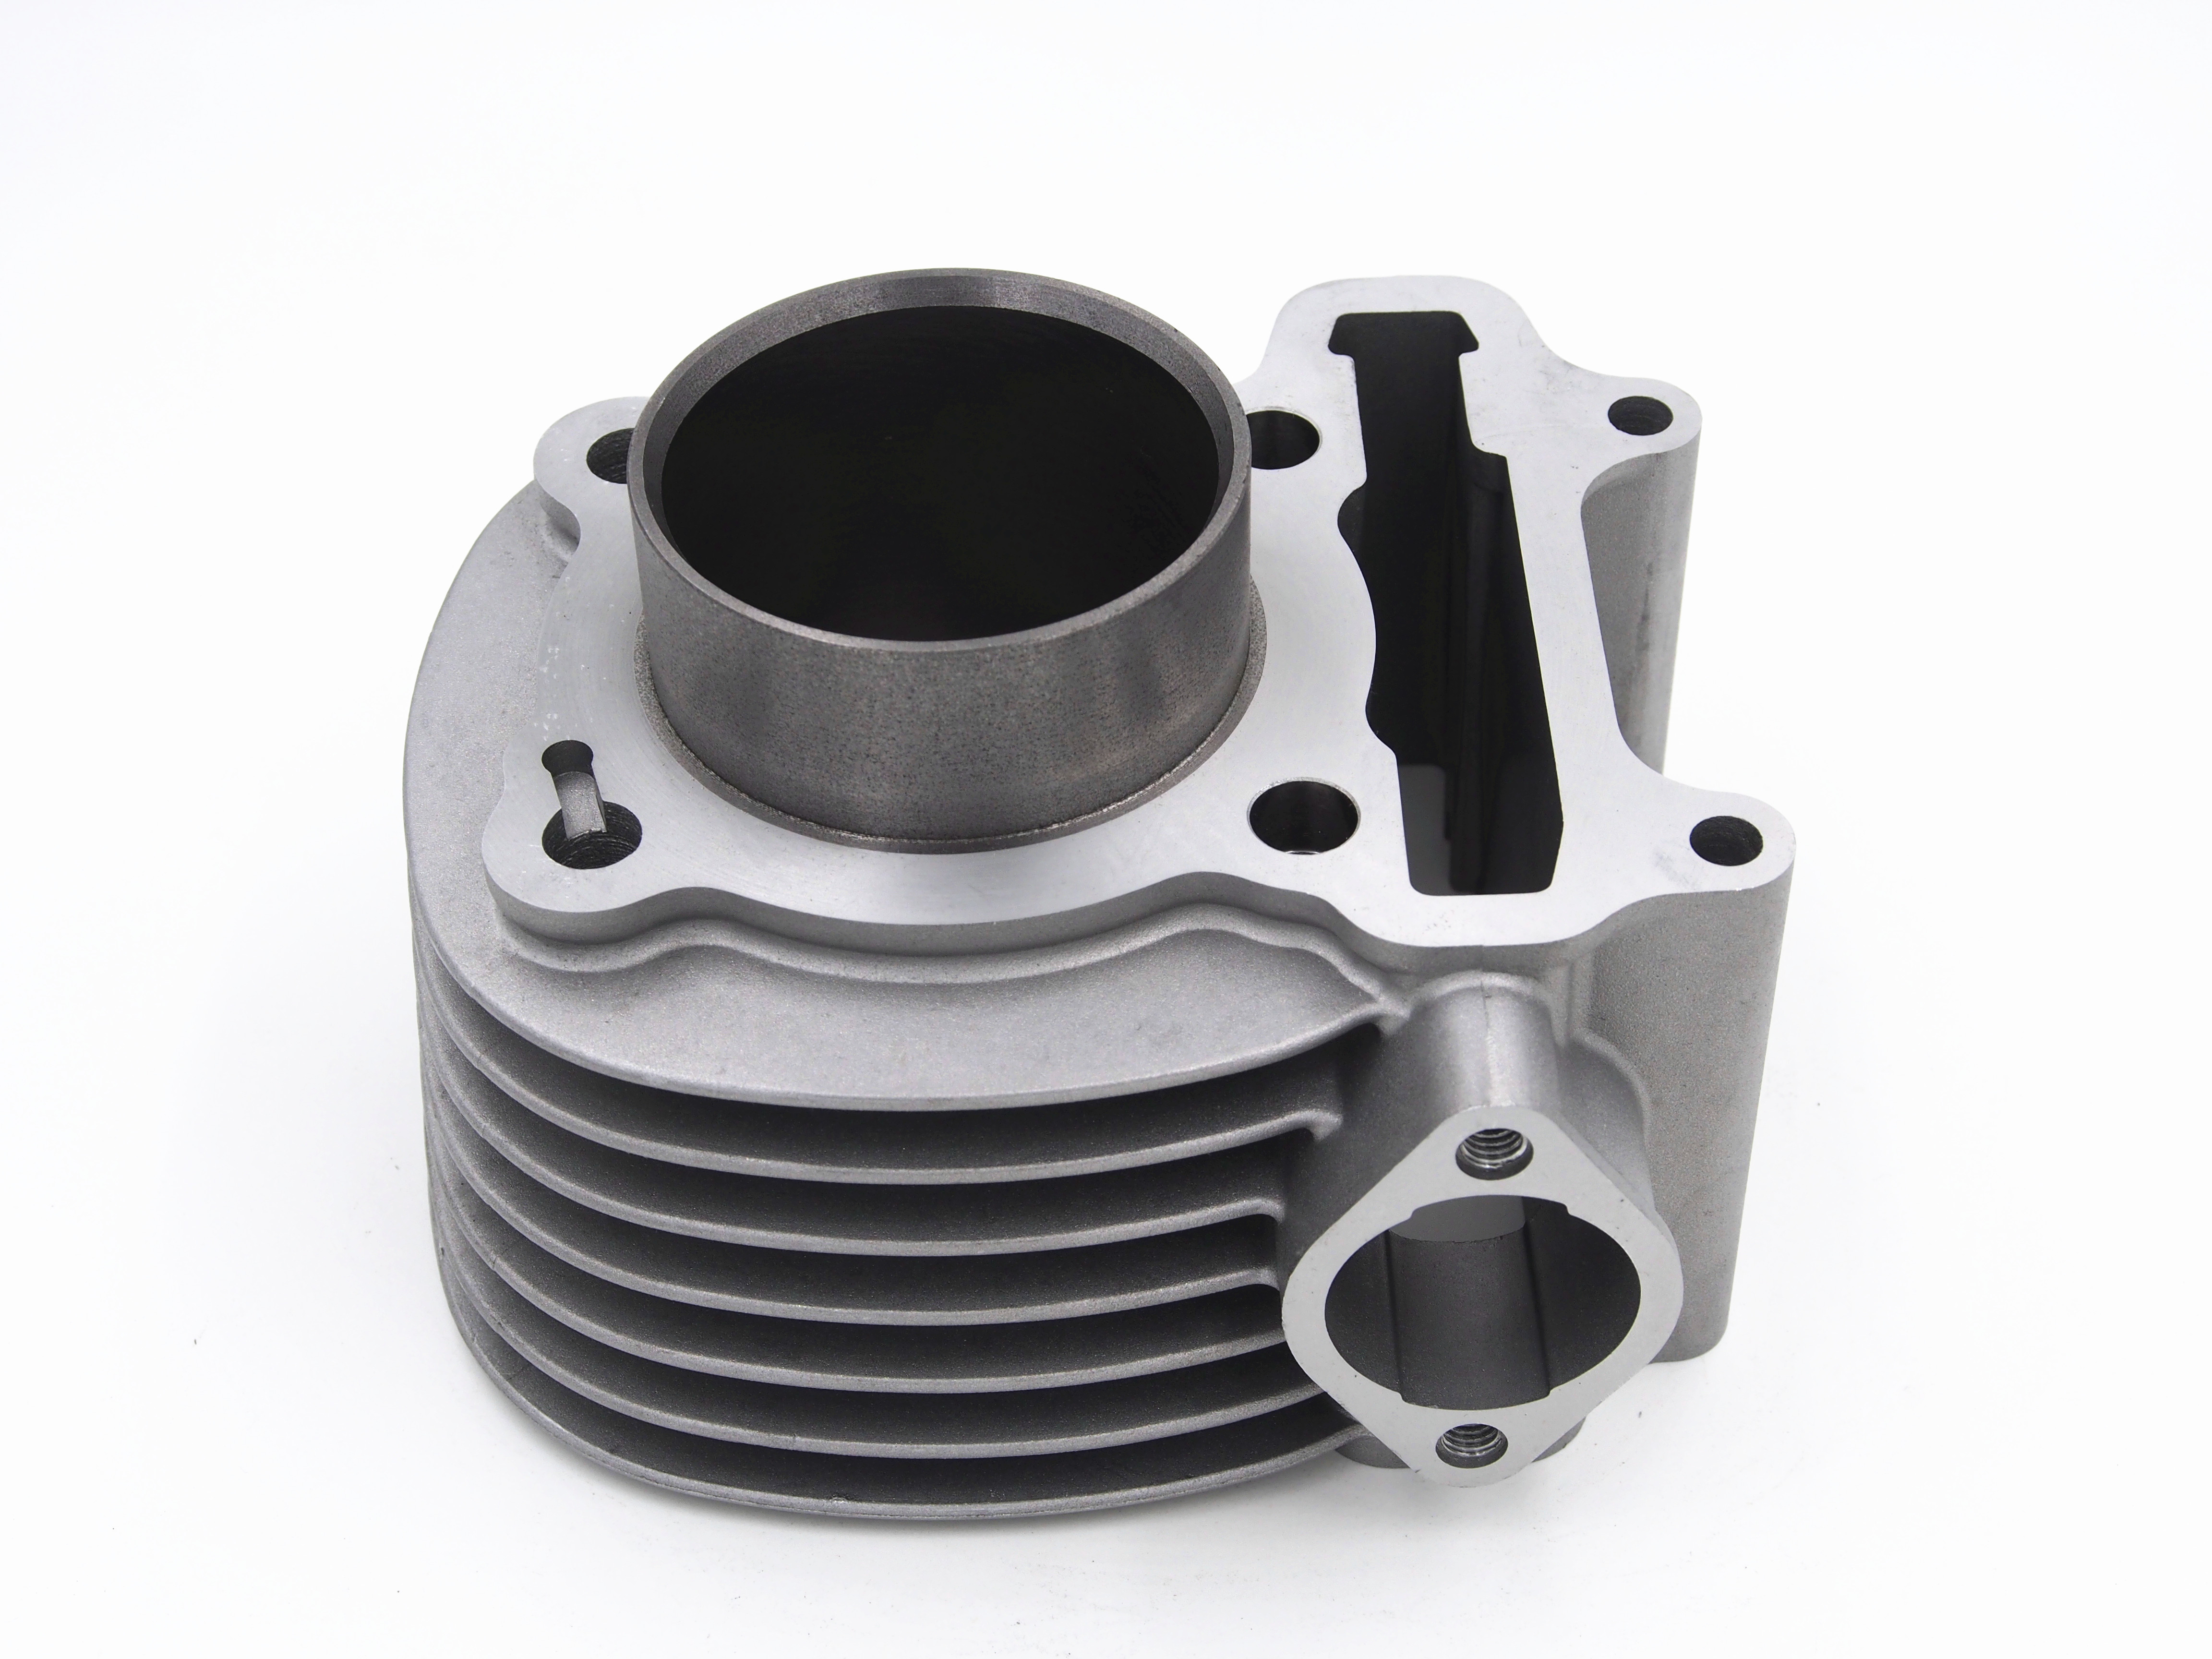 Popular SYM Aluminum Engine Block , 52.4mm Bore Motorcycle Single Cylinder